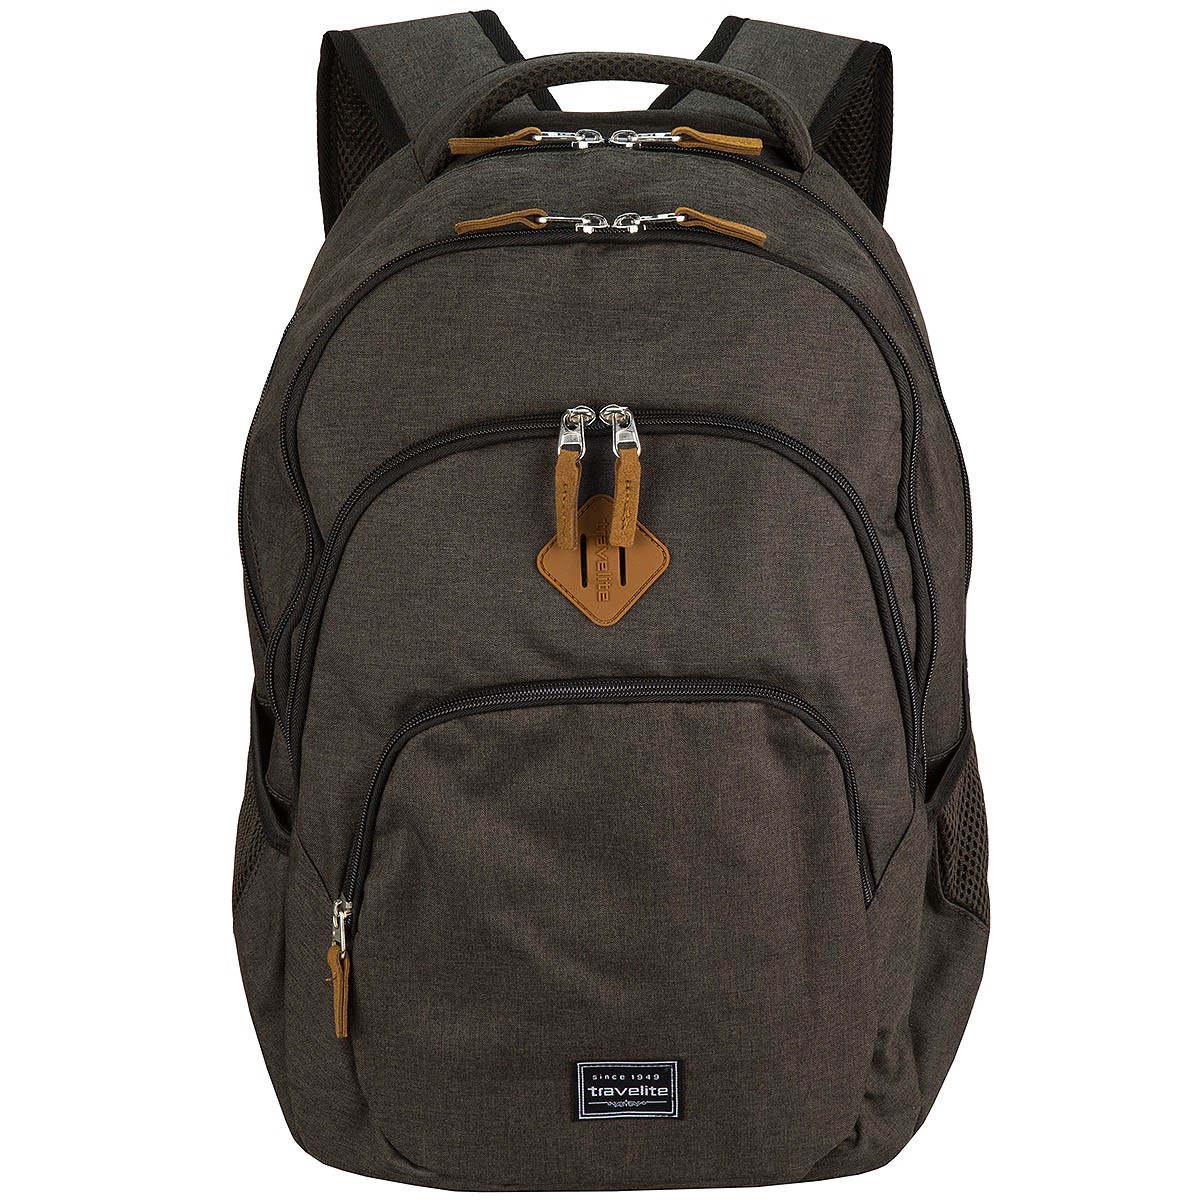 Travelite Basics Rucksack Daypack 45 cm Laptopfach groß geräumig bordeaux 